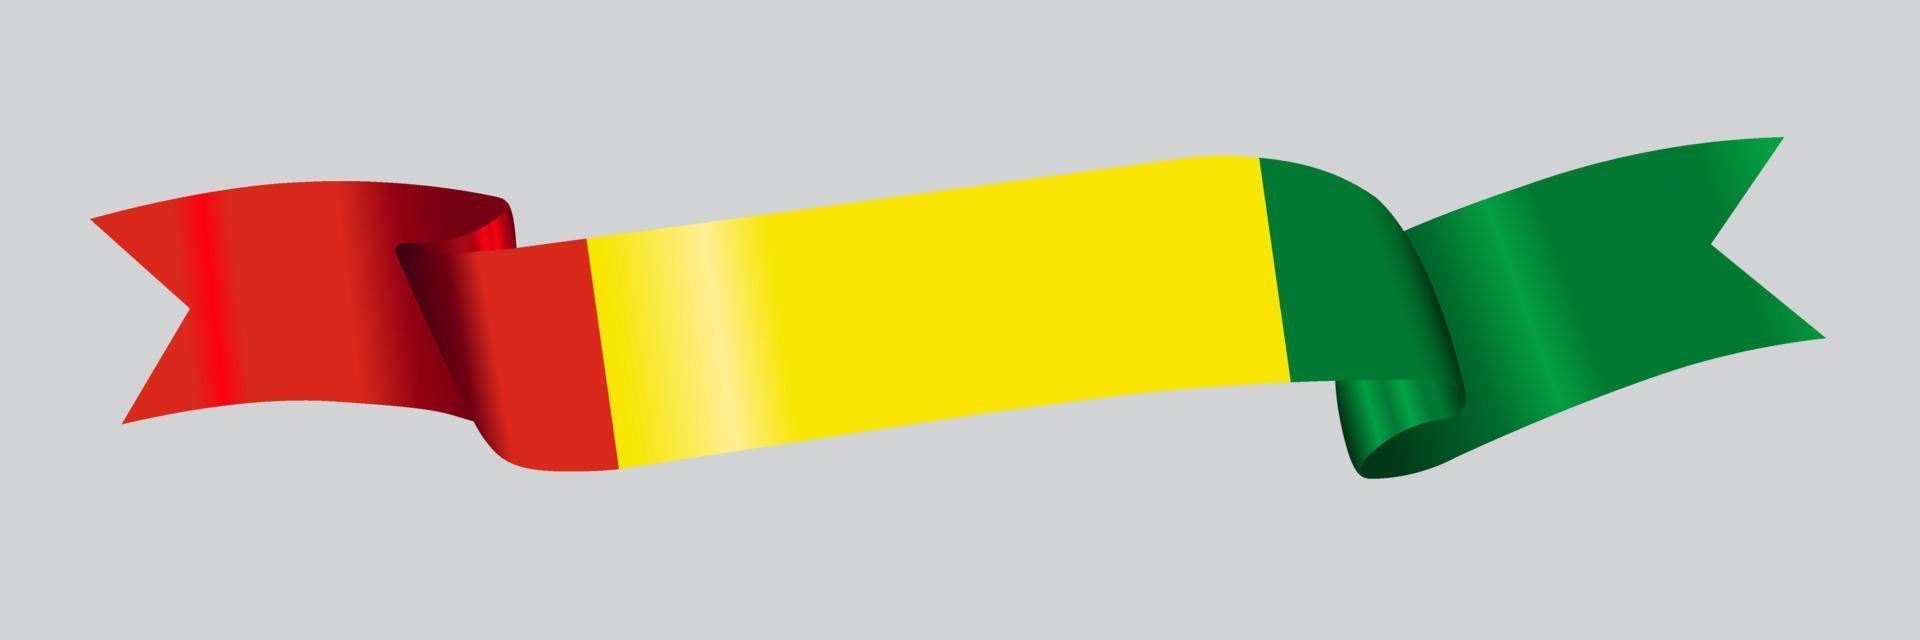 3d bandera de bolivia en una cinta de tela. vector